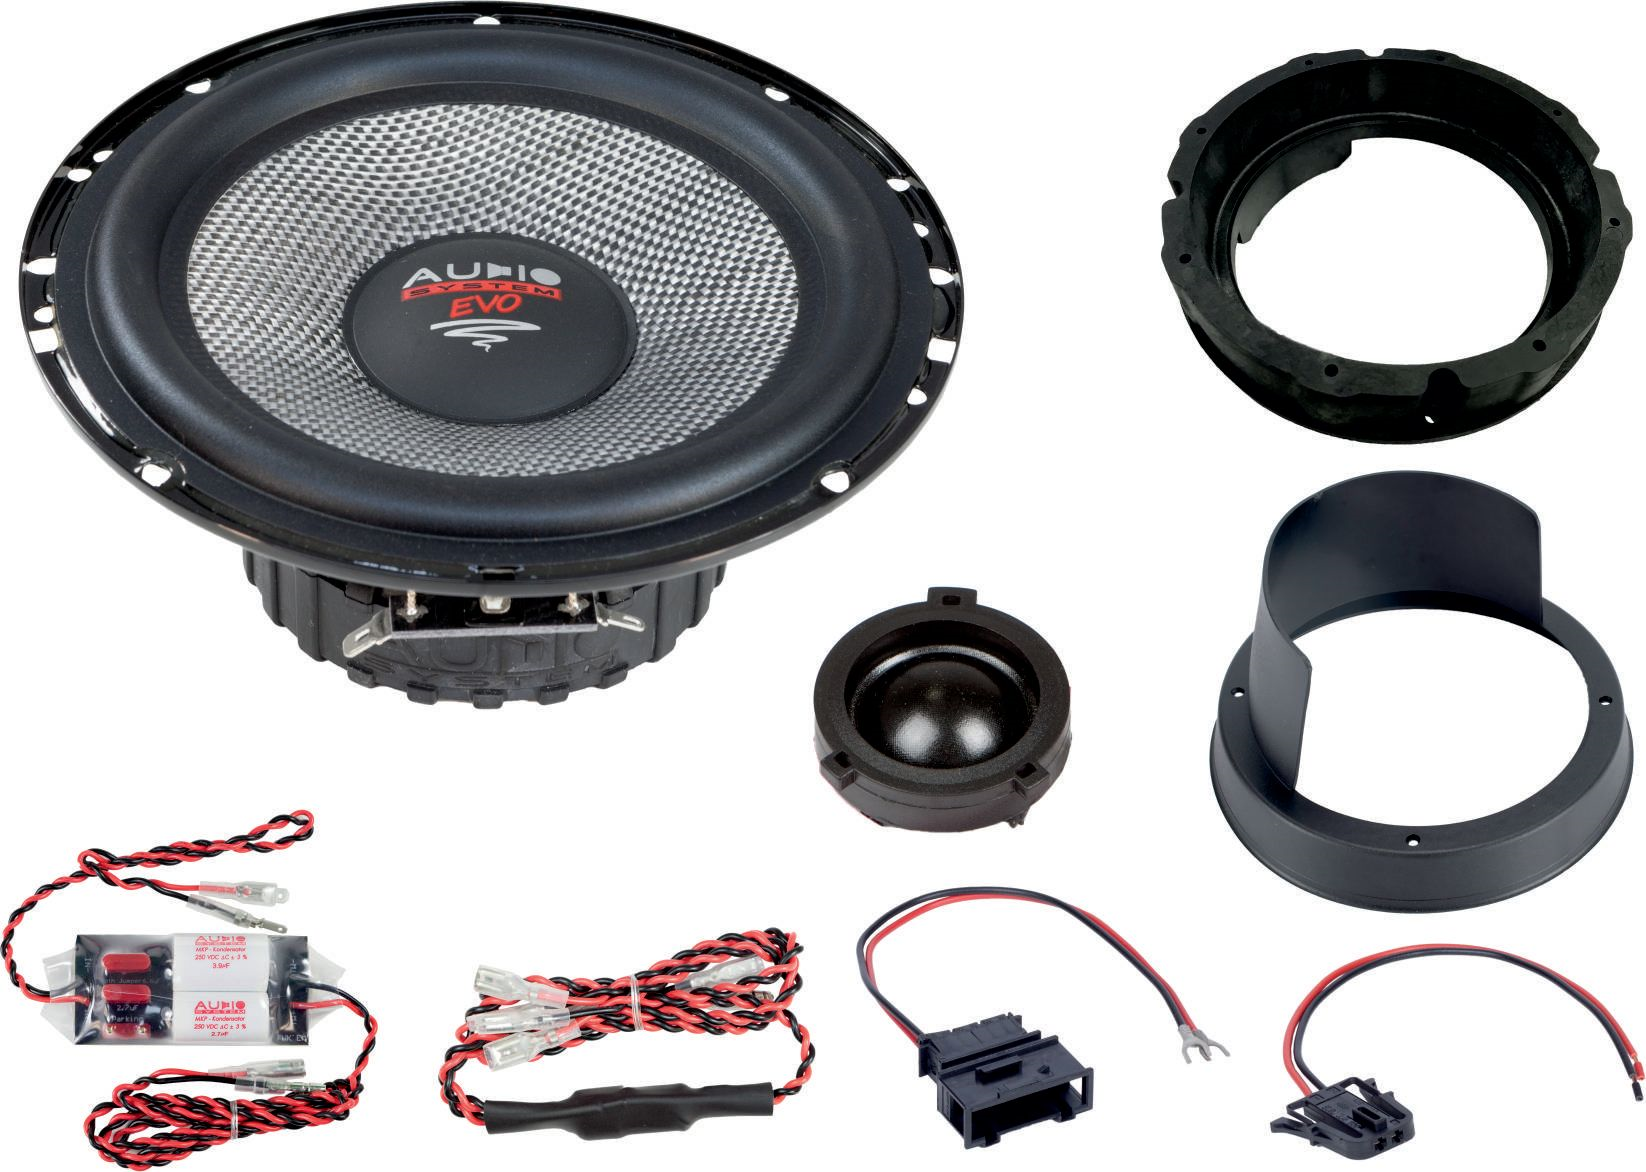 Audio System XFIT VW BORA EVO 2 Lautsprecher 165 mm 2-Wege VW BORA Compo System 